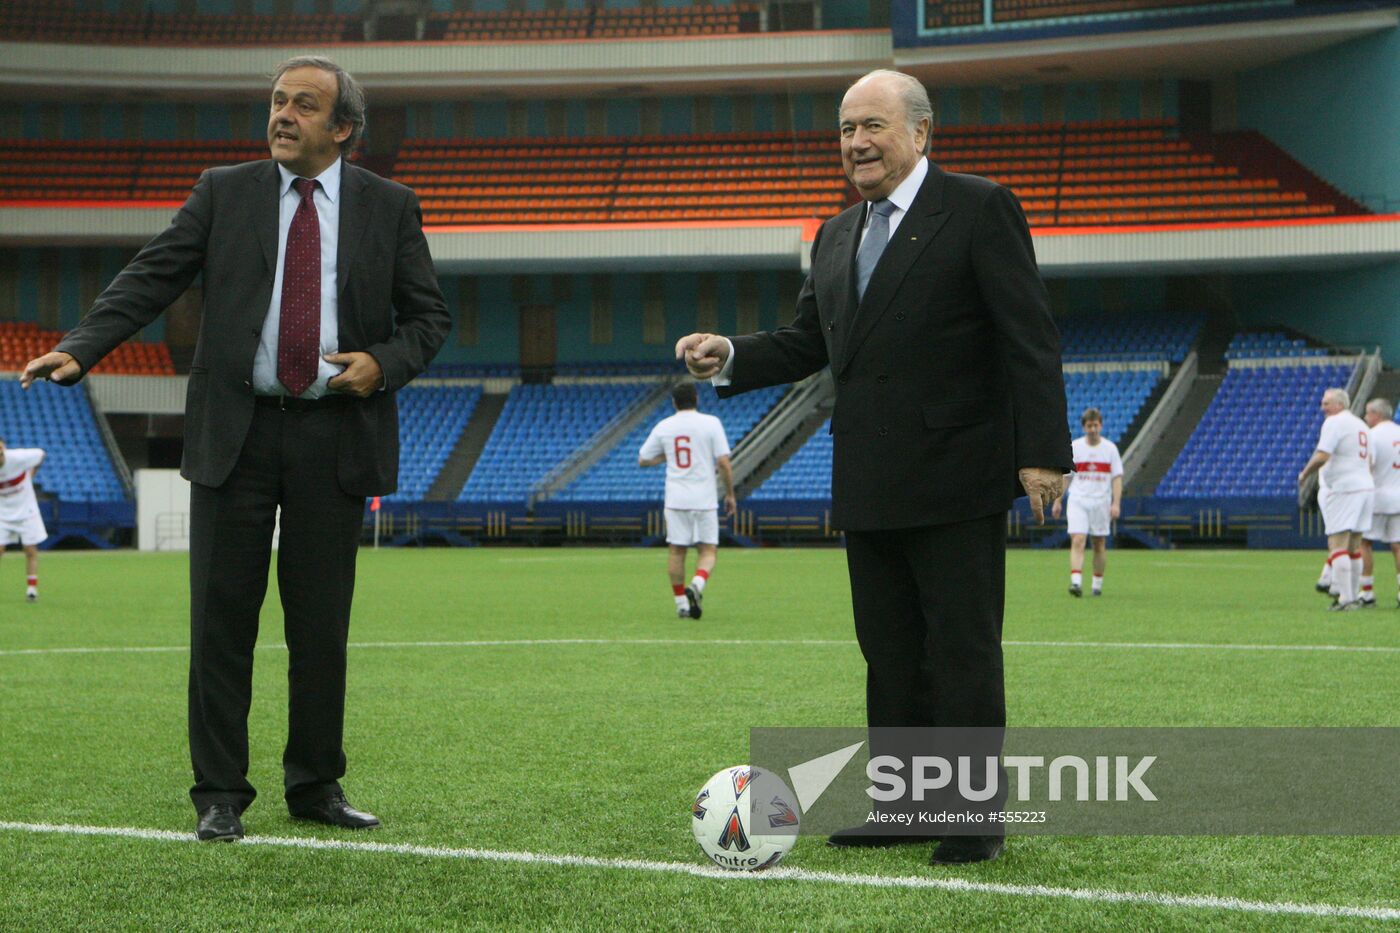 Michel Platini and Joseph Blatter